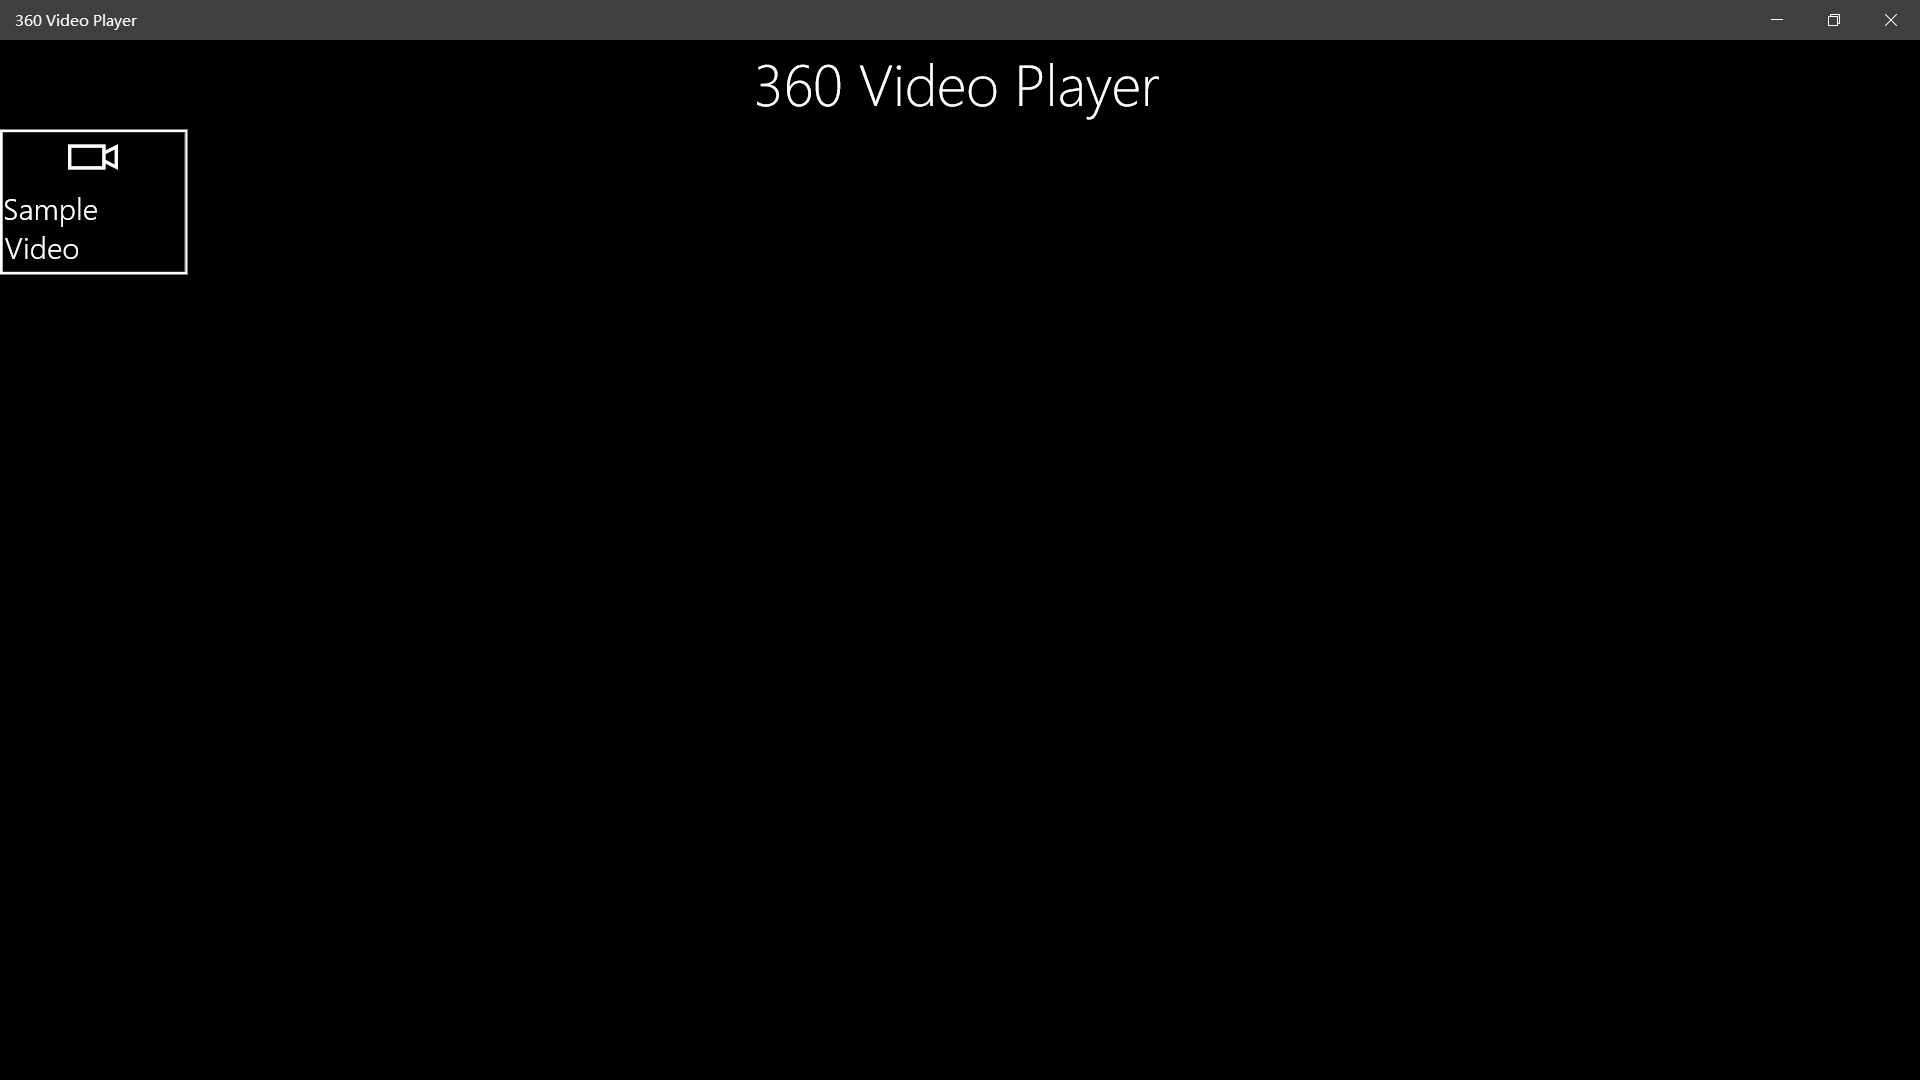 360 Video Player